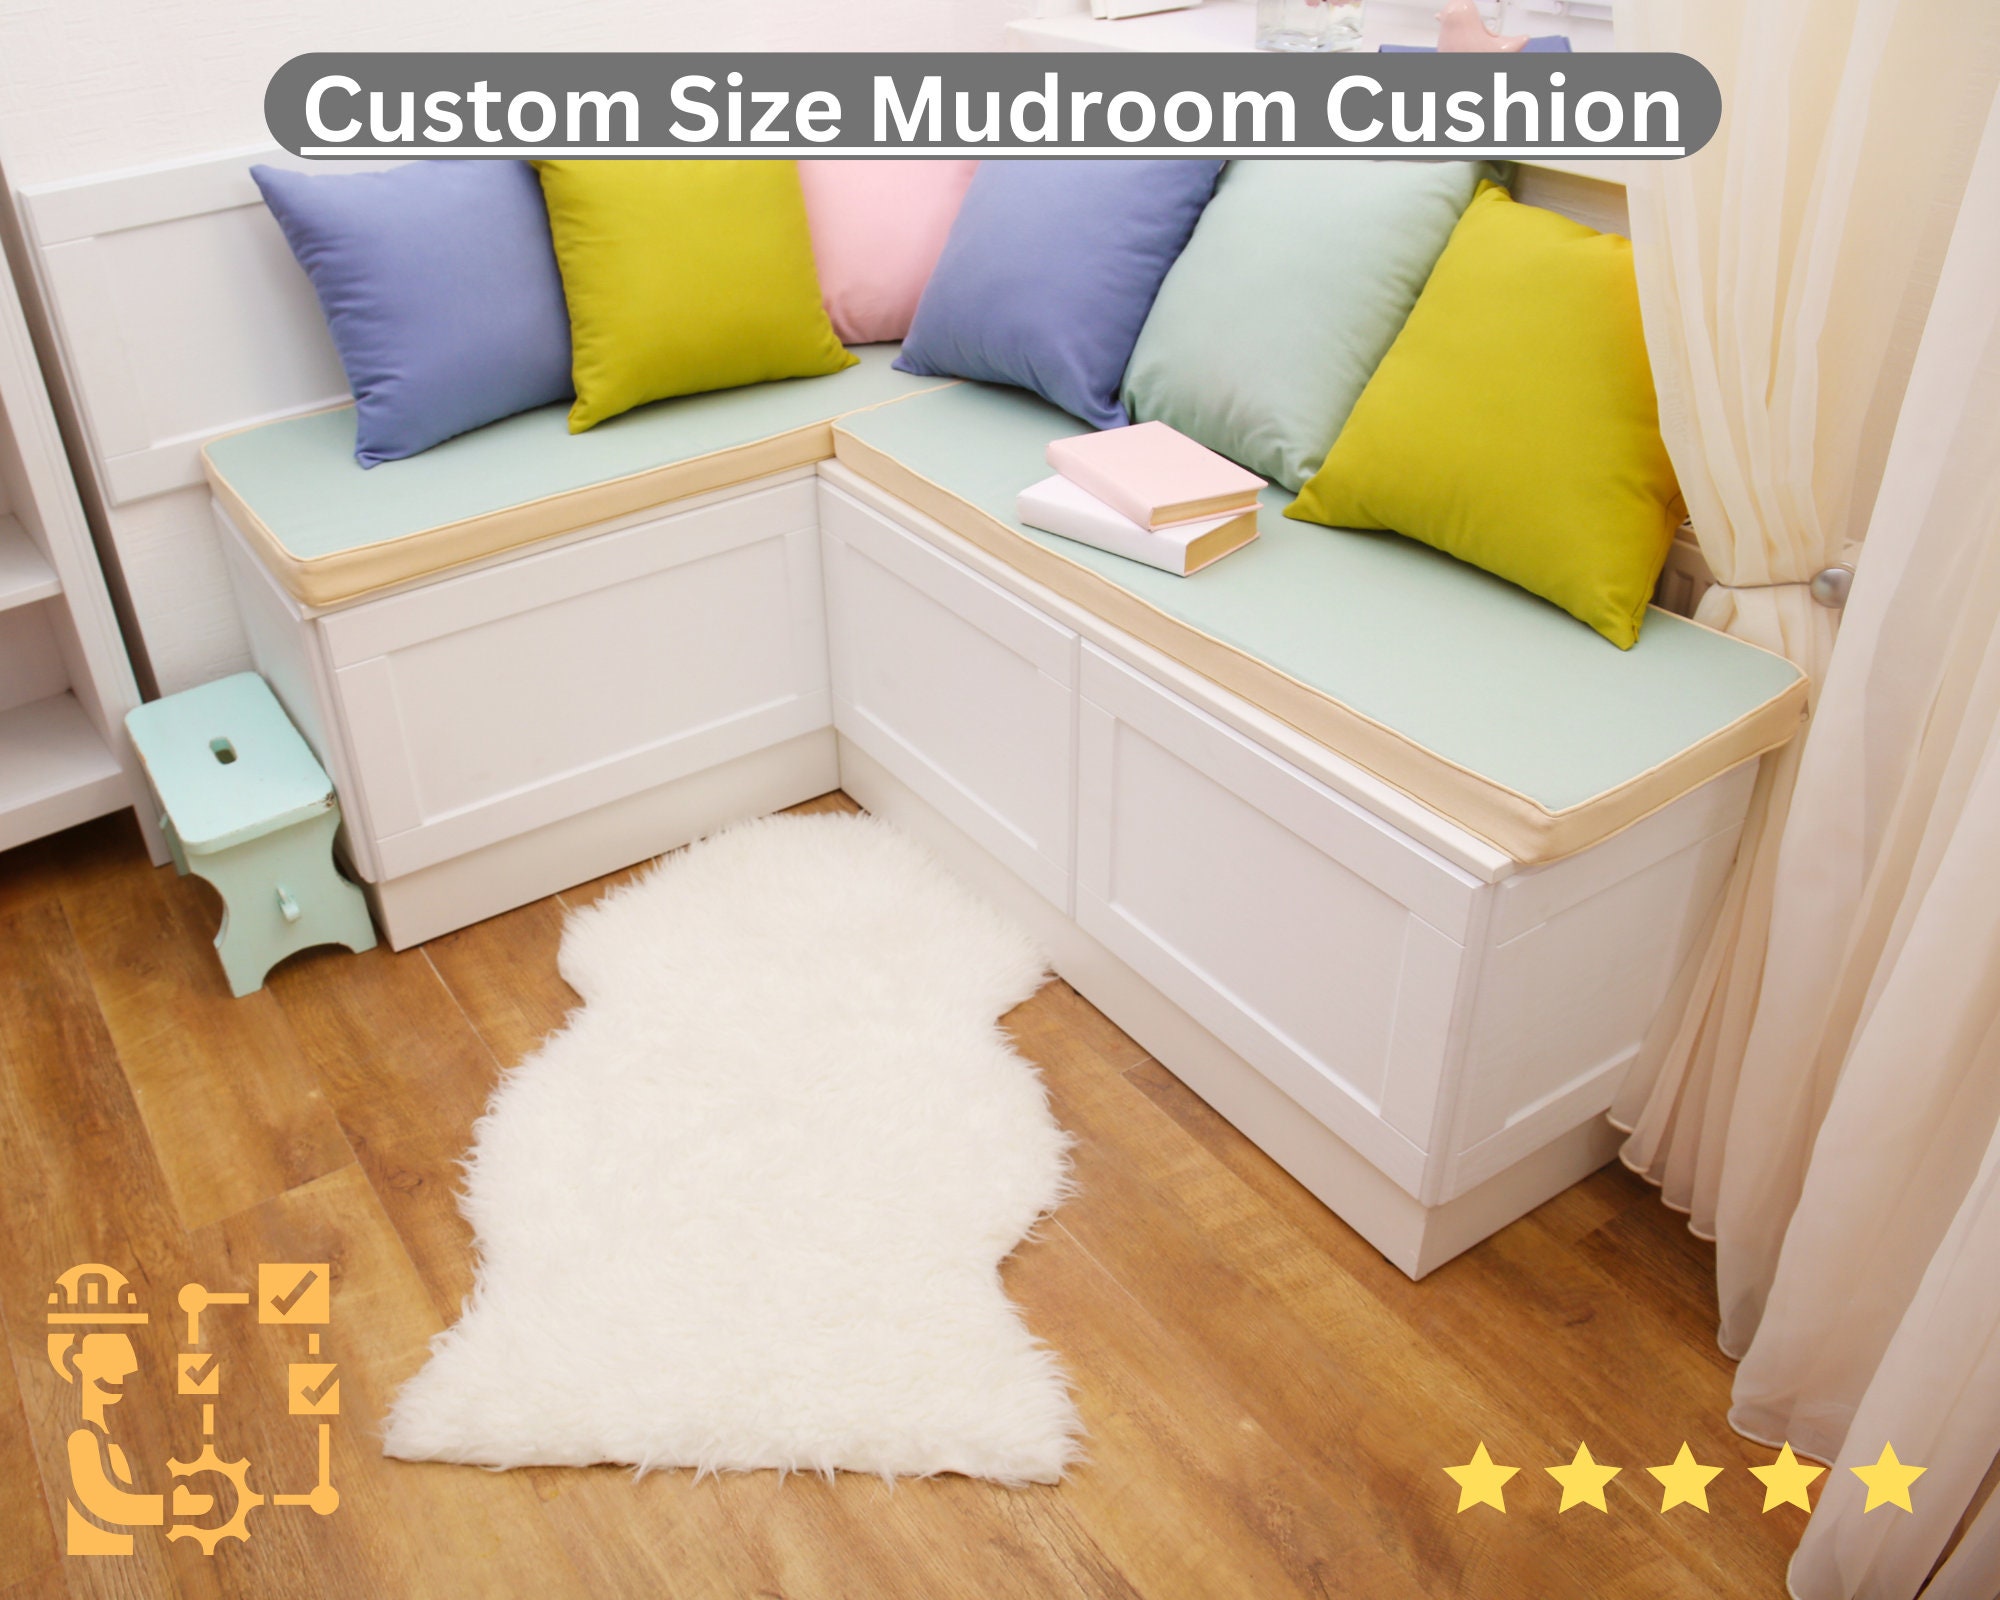 Hemp natural non-dyed dark grey window Mudroom Floor Bench cushion wit –  HempOrganicLife